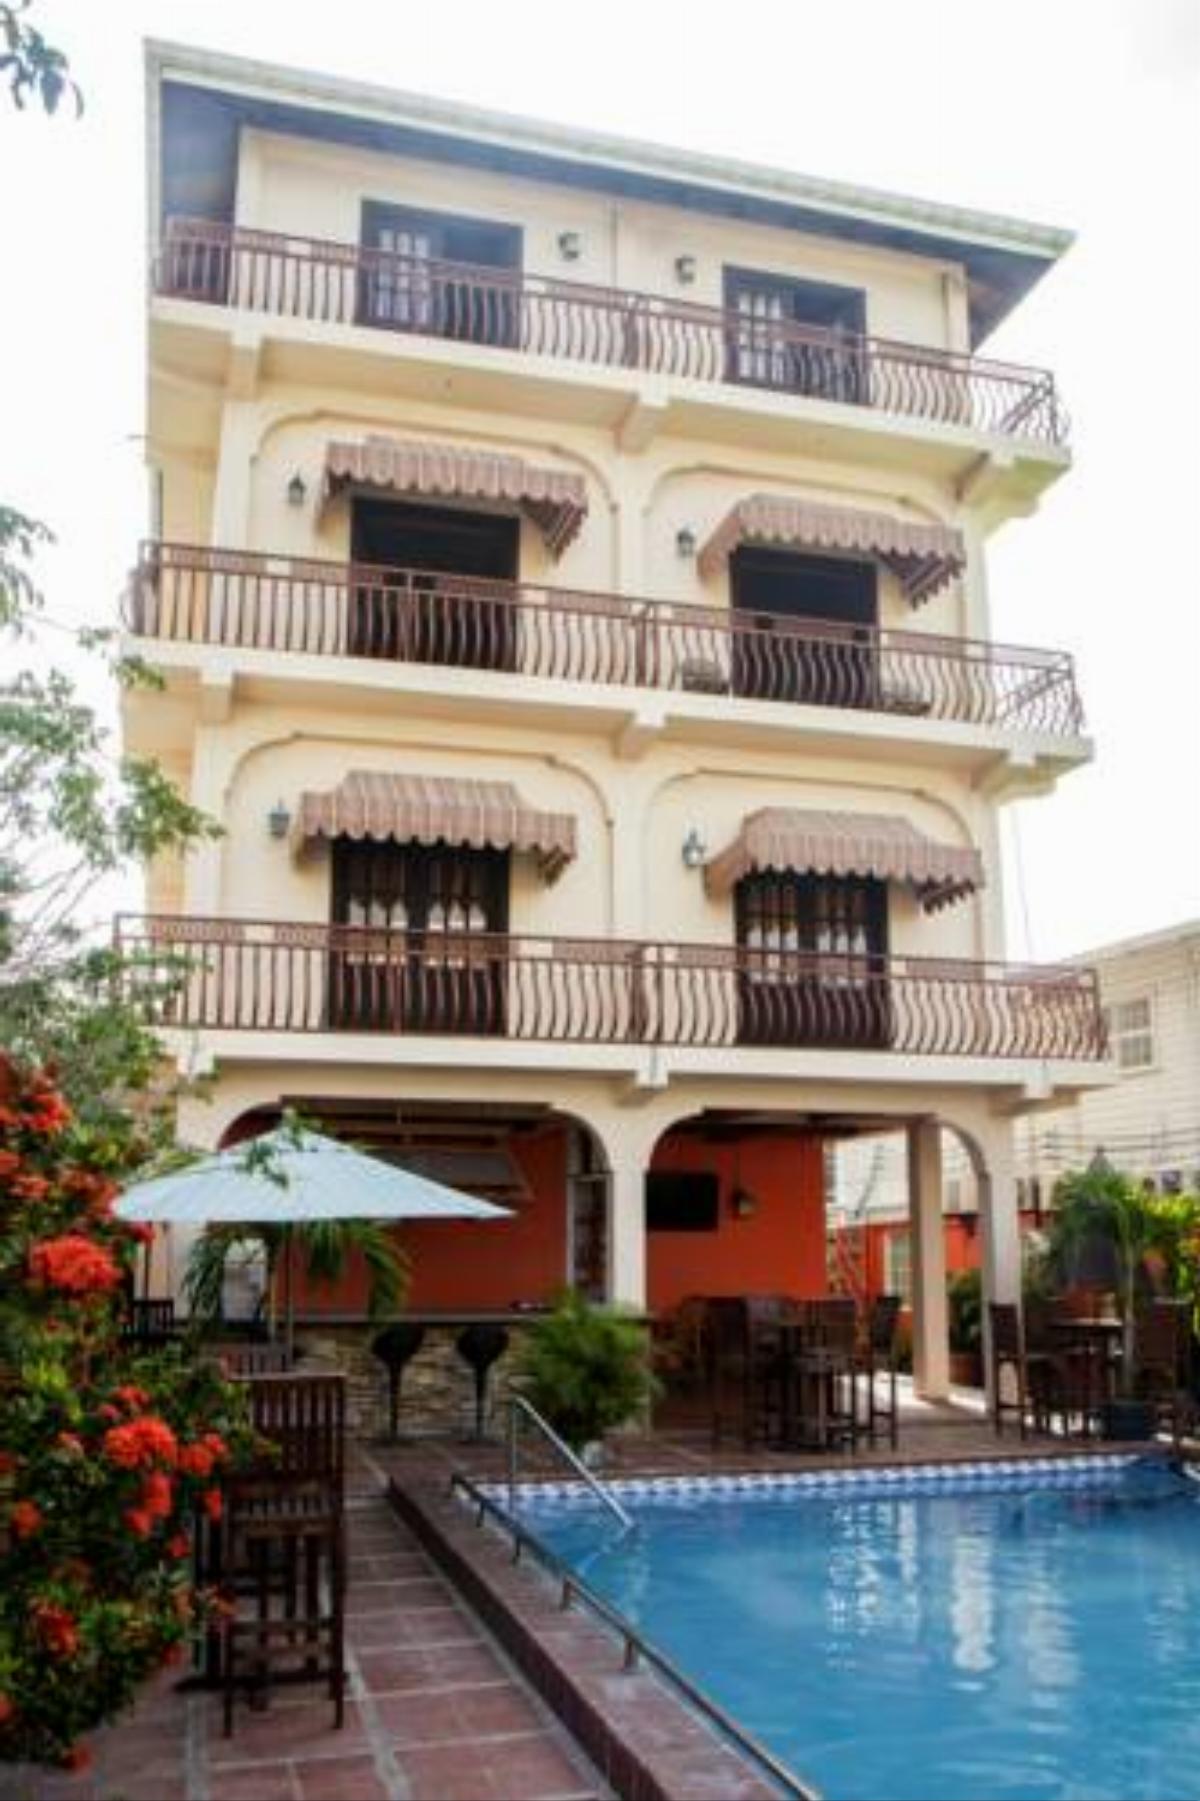 Windjammer International Cuisine & Comfort Inn Hotel Georgetown Guyana